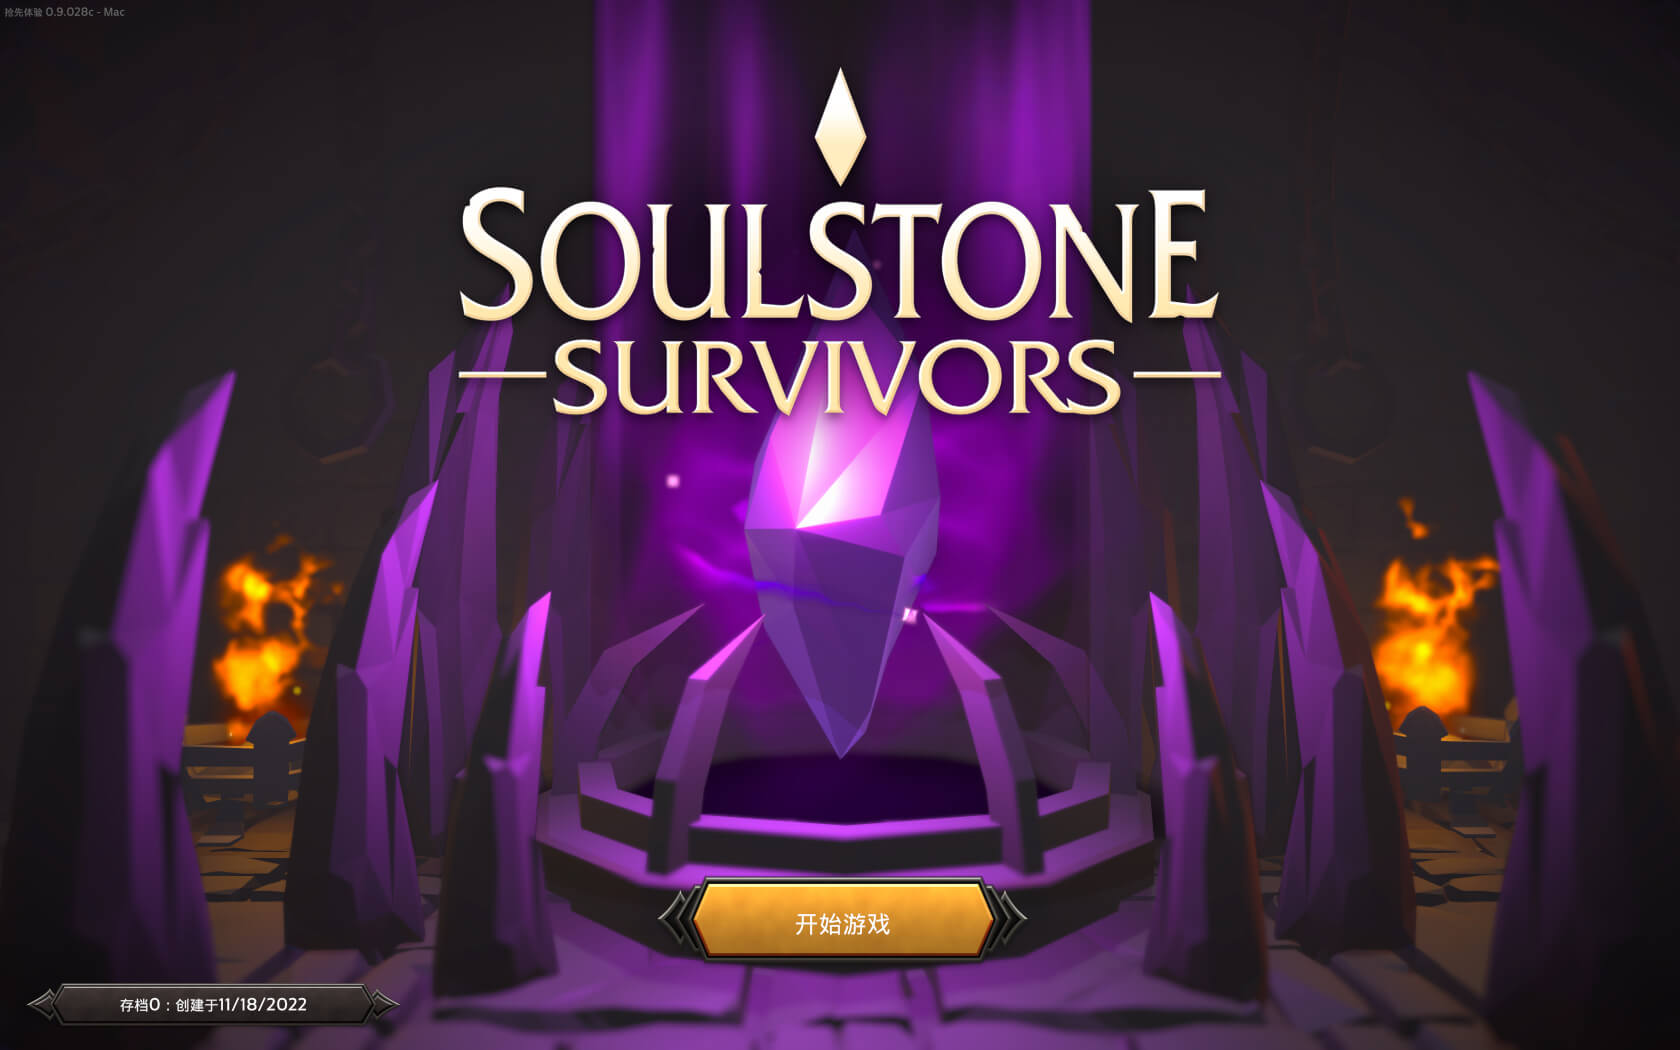 灵魂石幸存者 Soulstone Survivors for Mac vEA9g 中文原生版-1